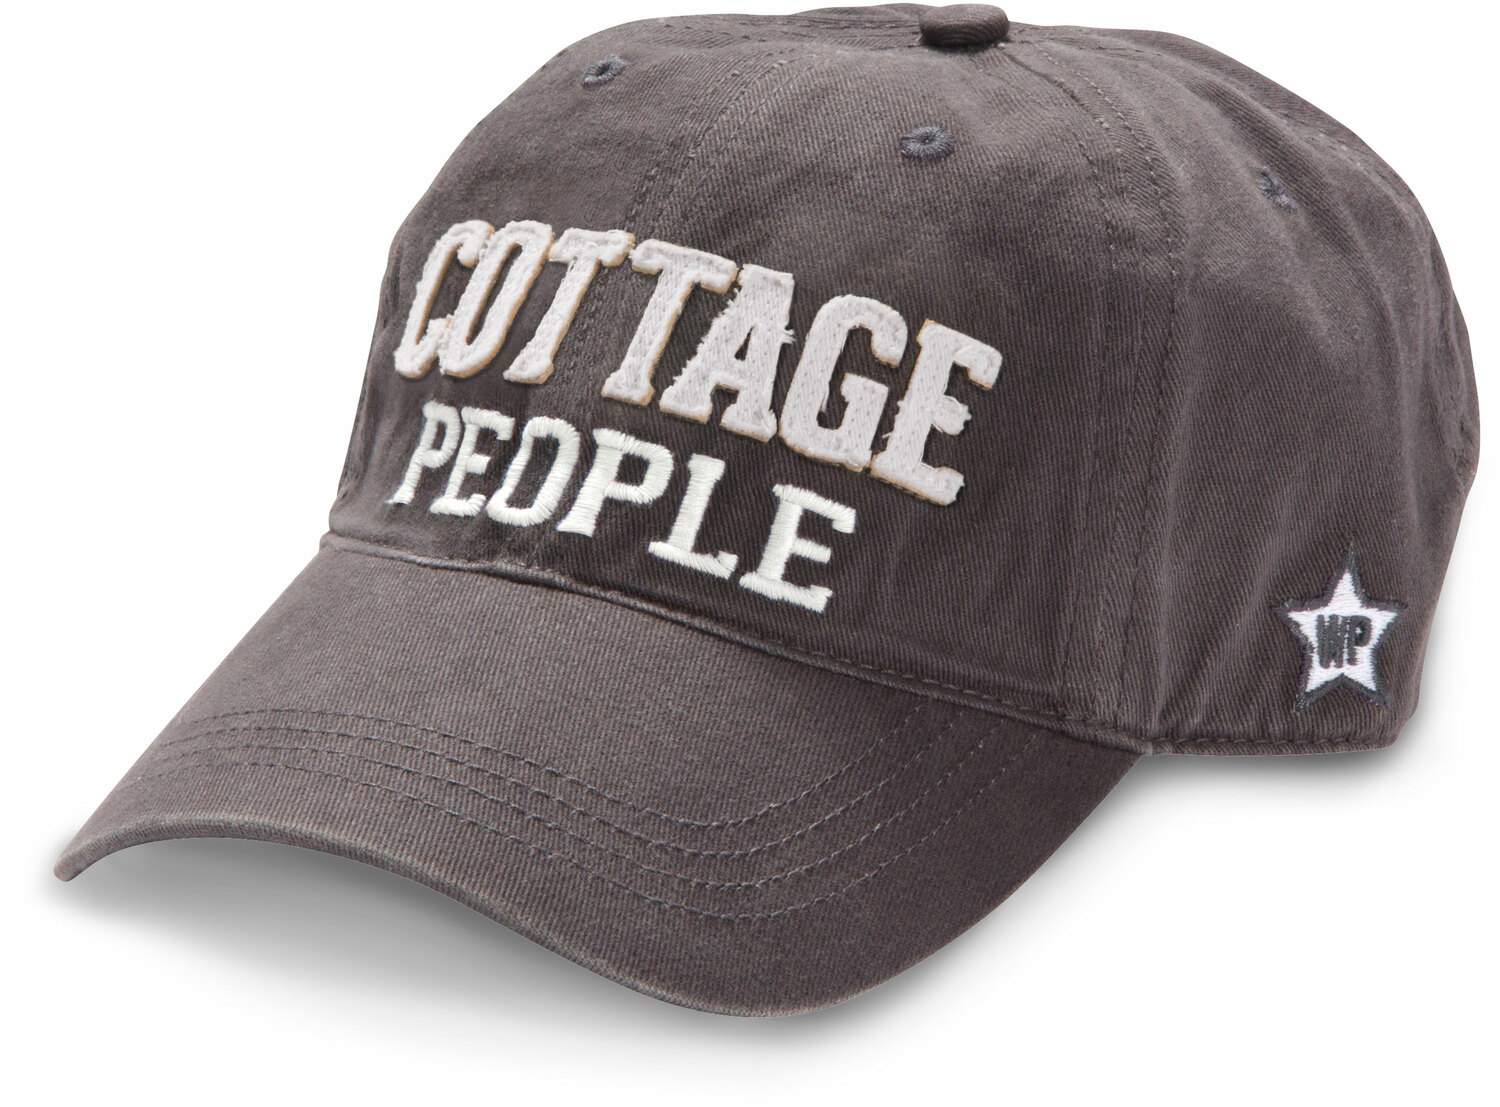 Cottage People by We People - Cottage People - Dark Gray Adjustable Hat